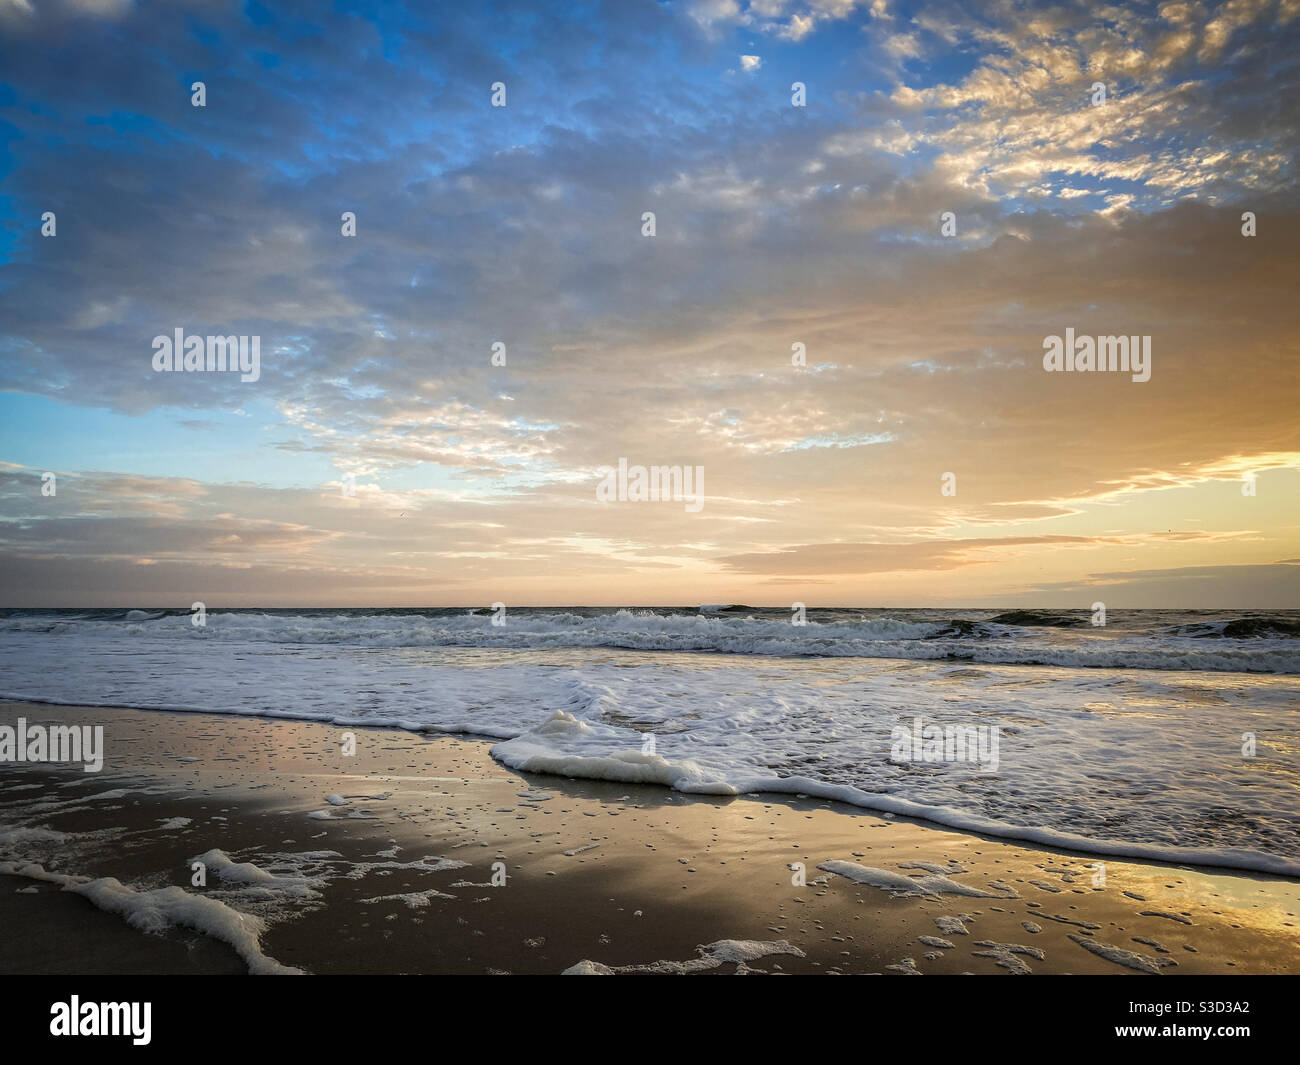 Beautiful beach sunrise with waves washing in on Amelia Island, Florida. Stock Photo